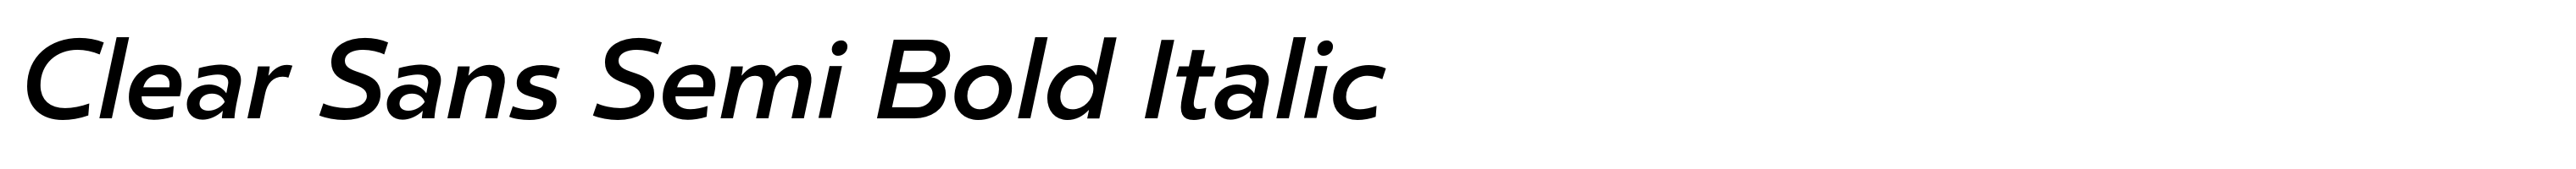 Clear Sans Semi Bold Italic